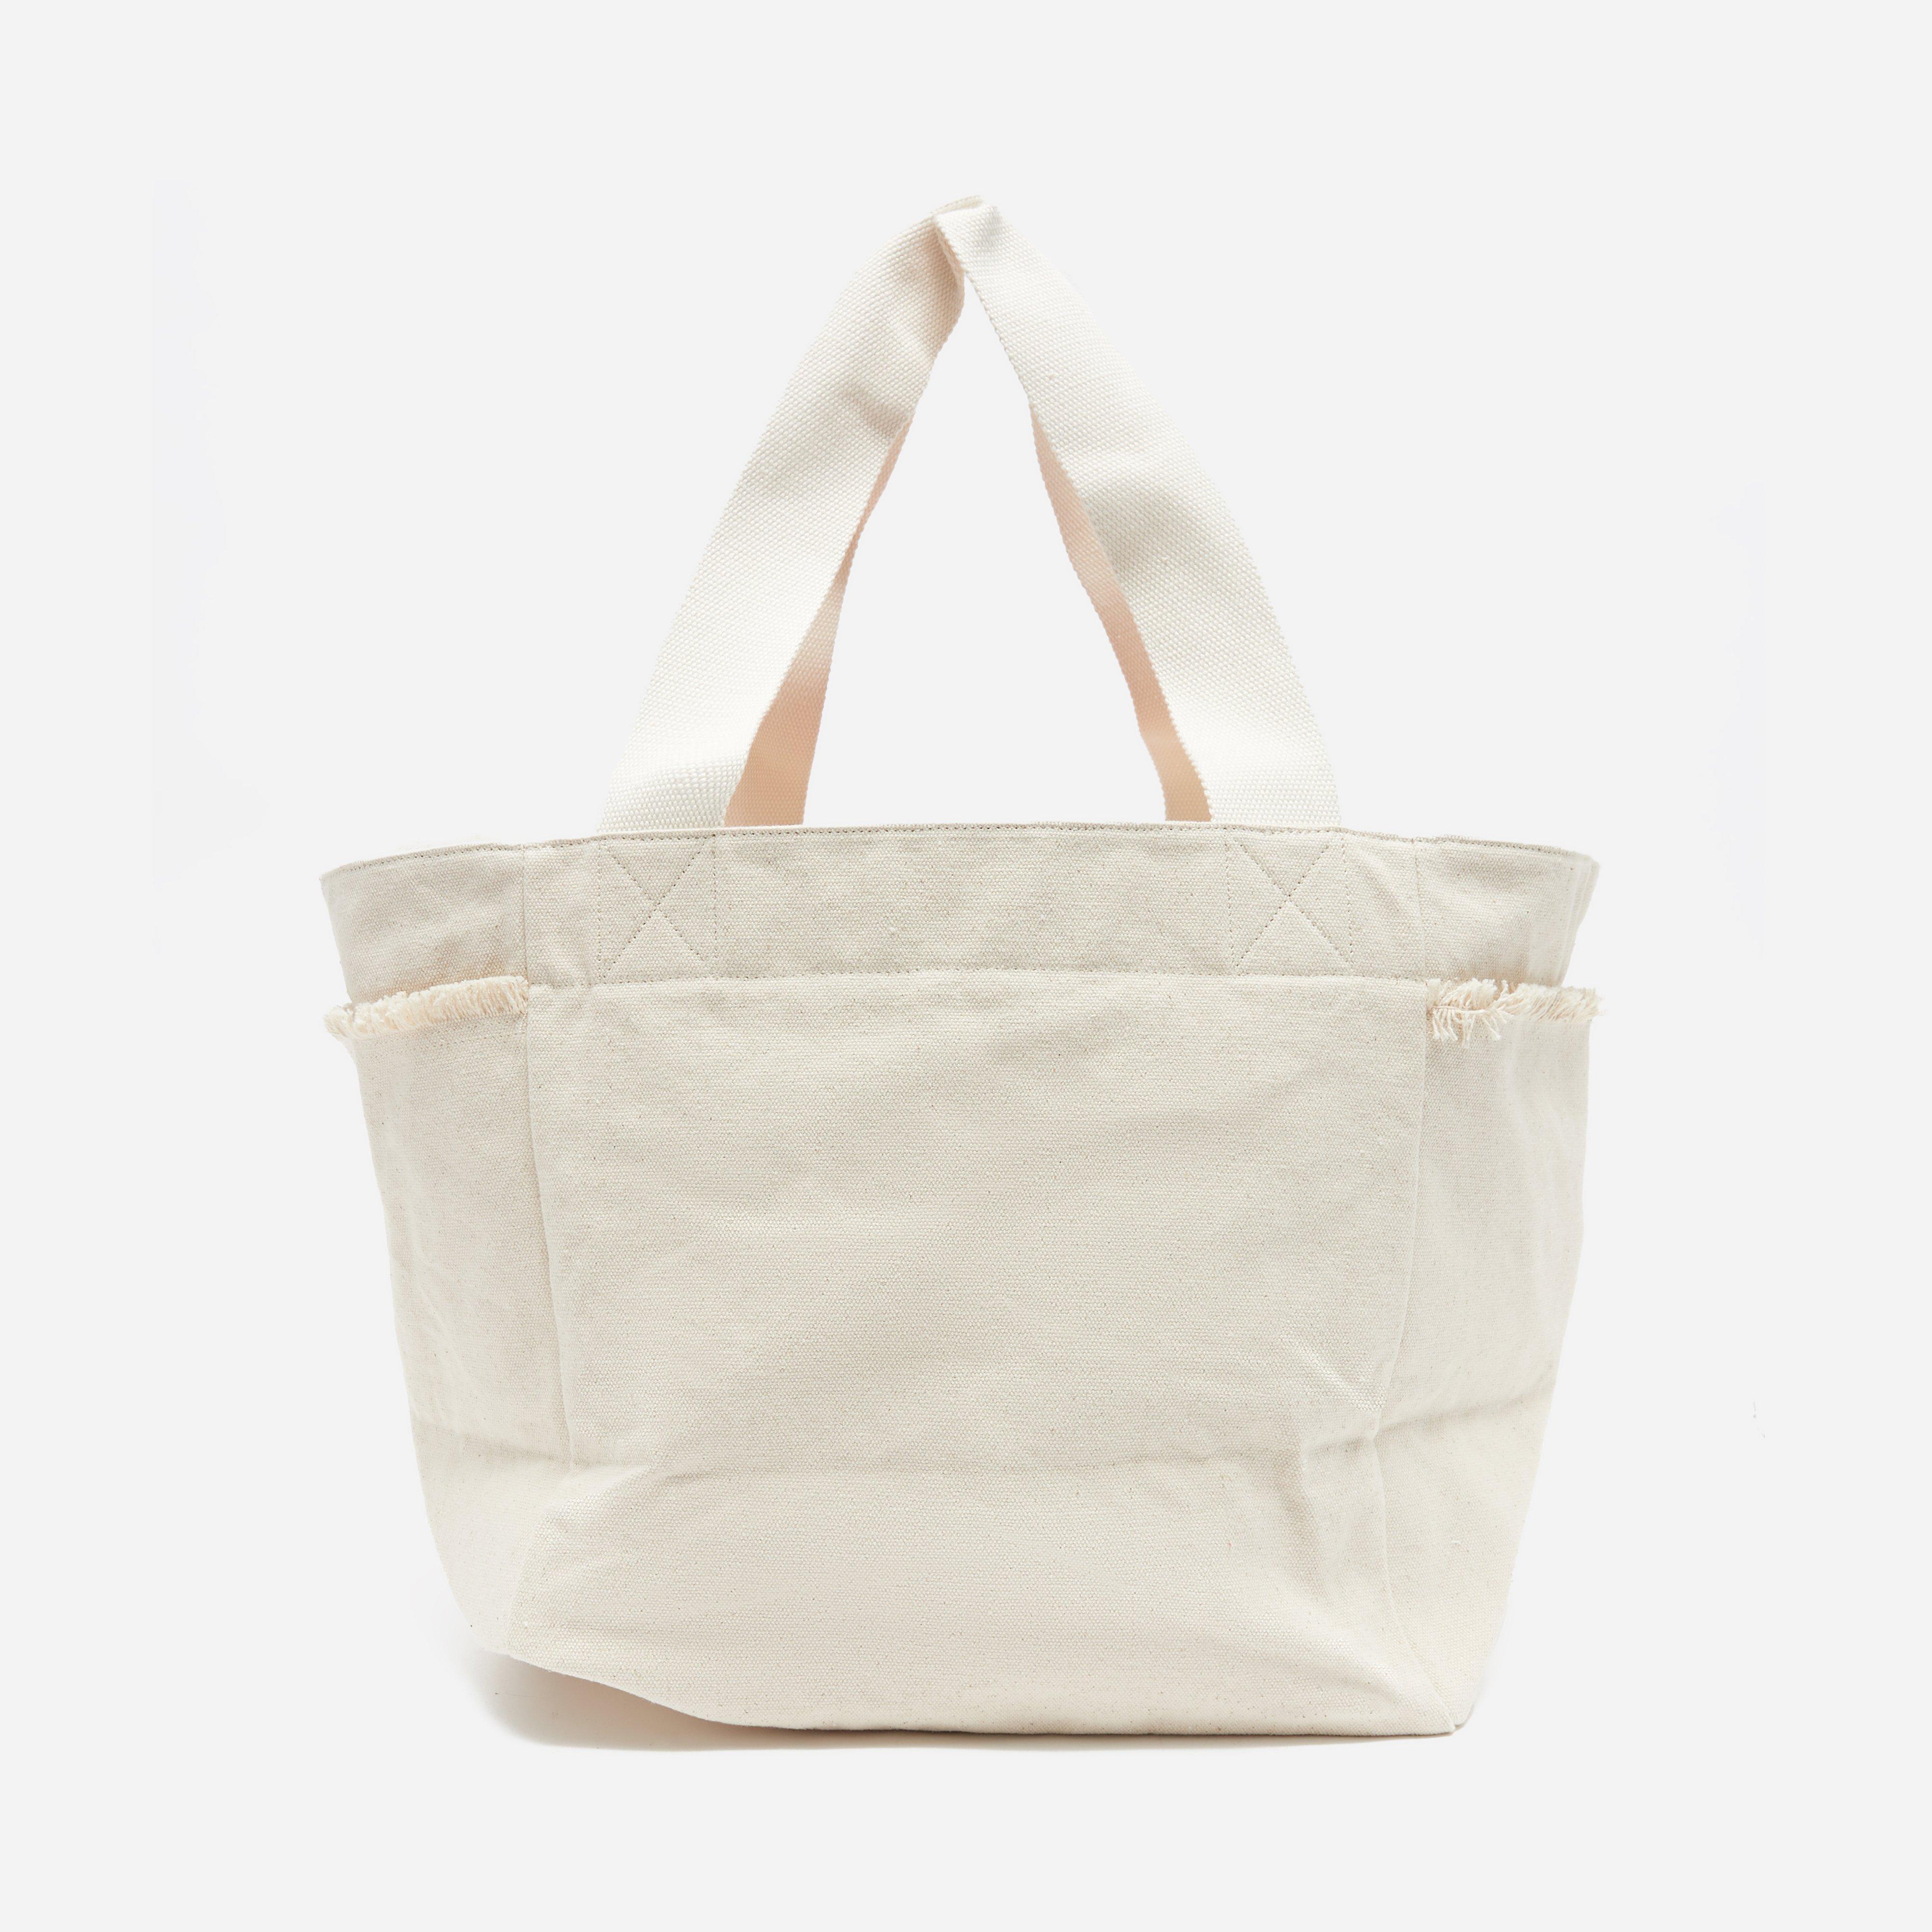 Samsøe & Samsøe Lamis Shopper Tote Bag in Natural | Lyst